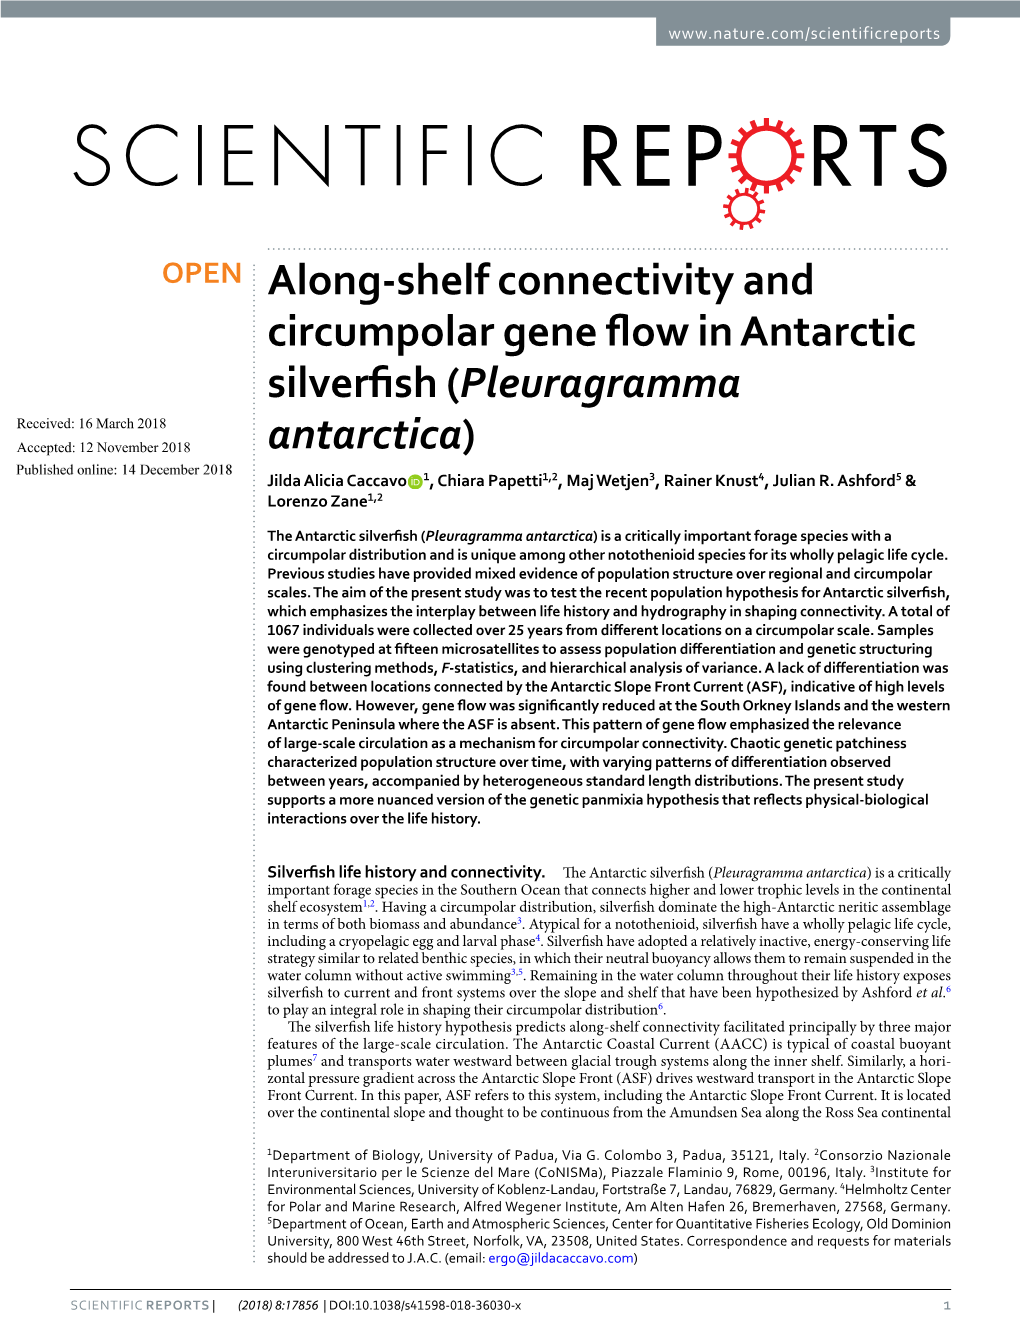 Along-Shelf Connectivity and Circumpolar Gene Flow in Antarctic